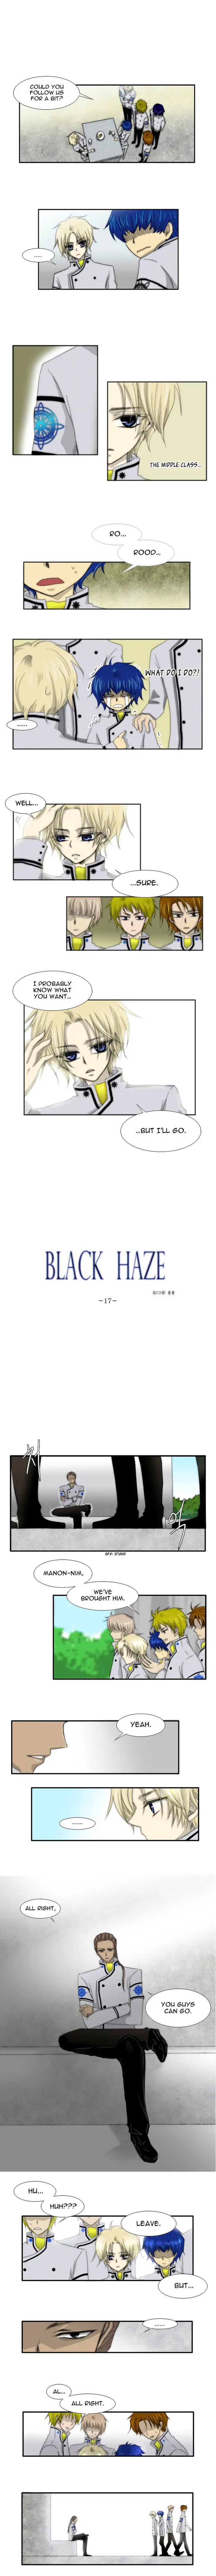 Black Haze - Chapter 17 Page 1